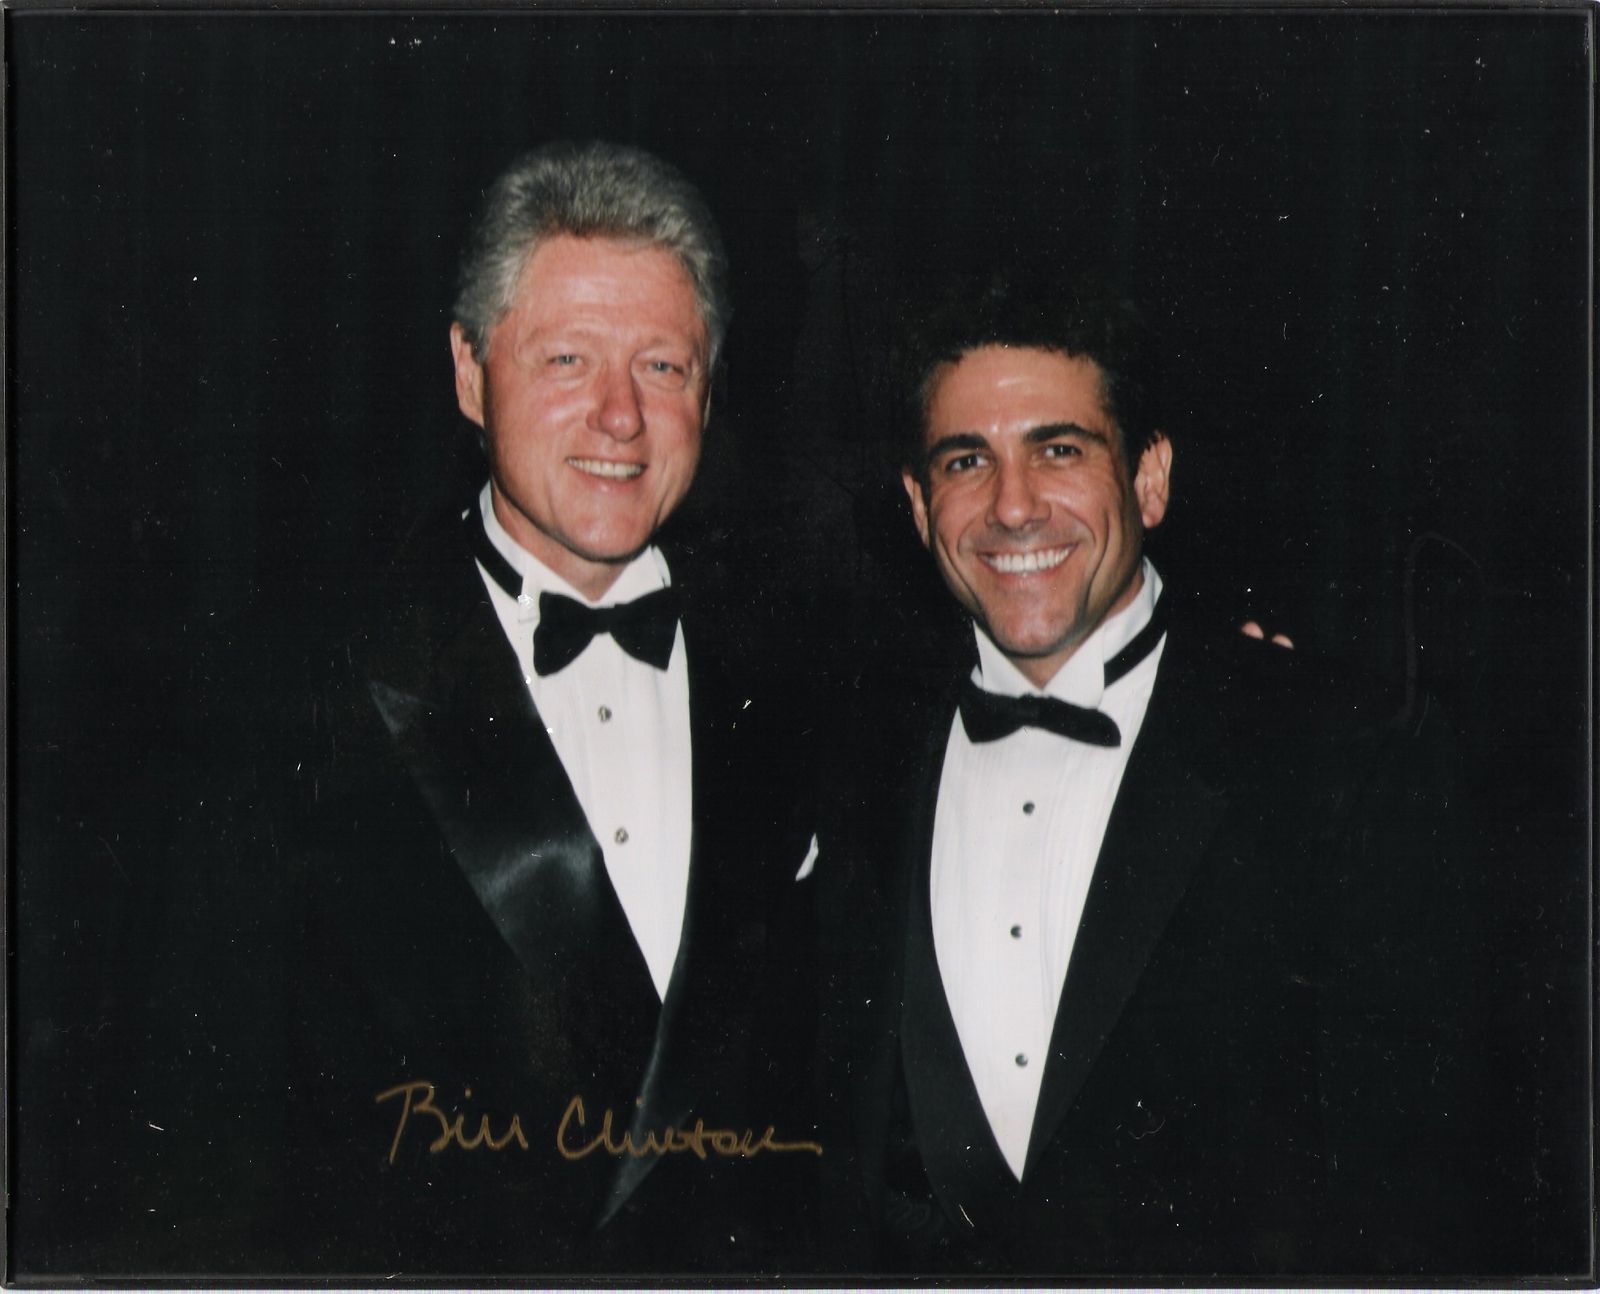 President Bill Clinton and Actor Steve Tyler